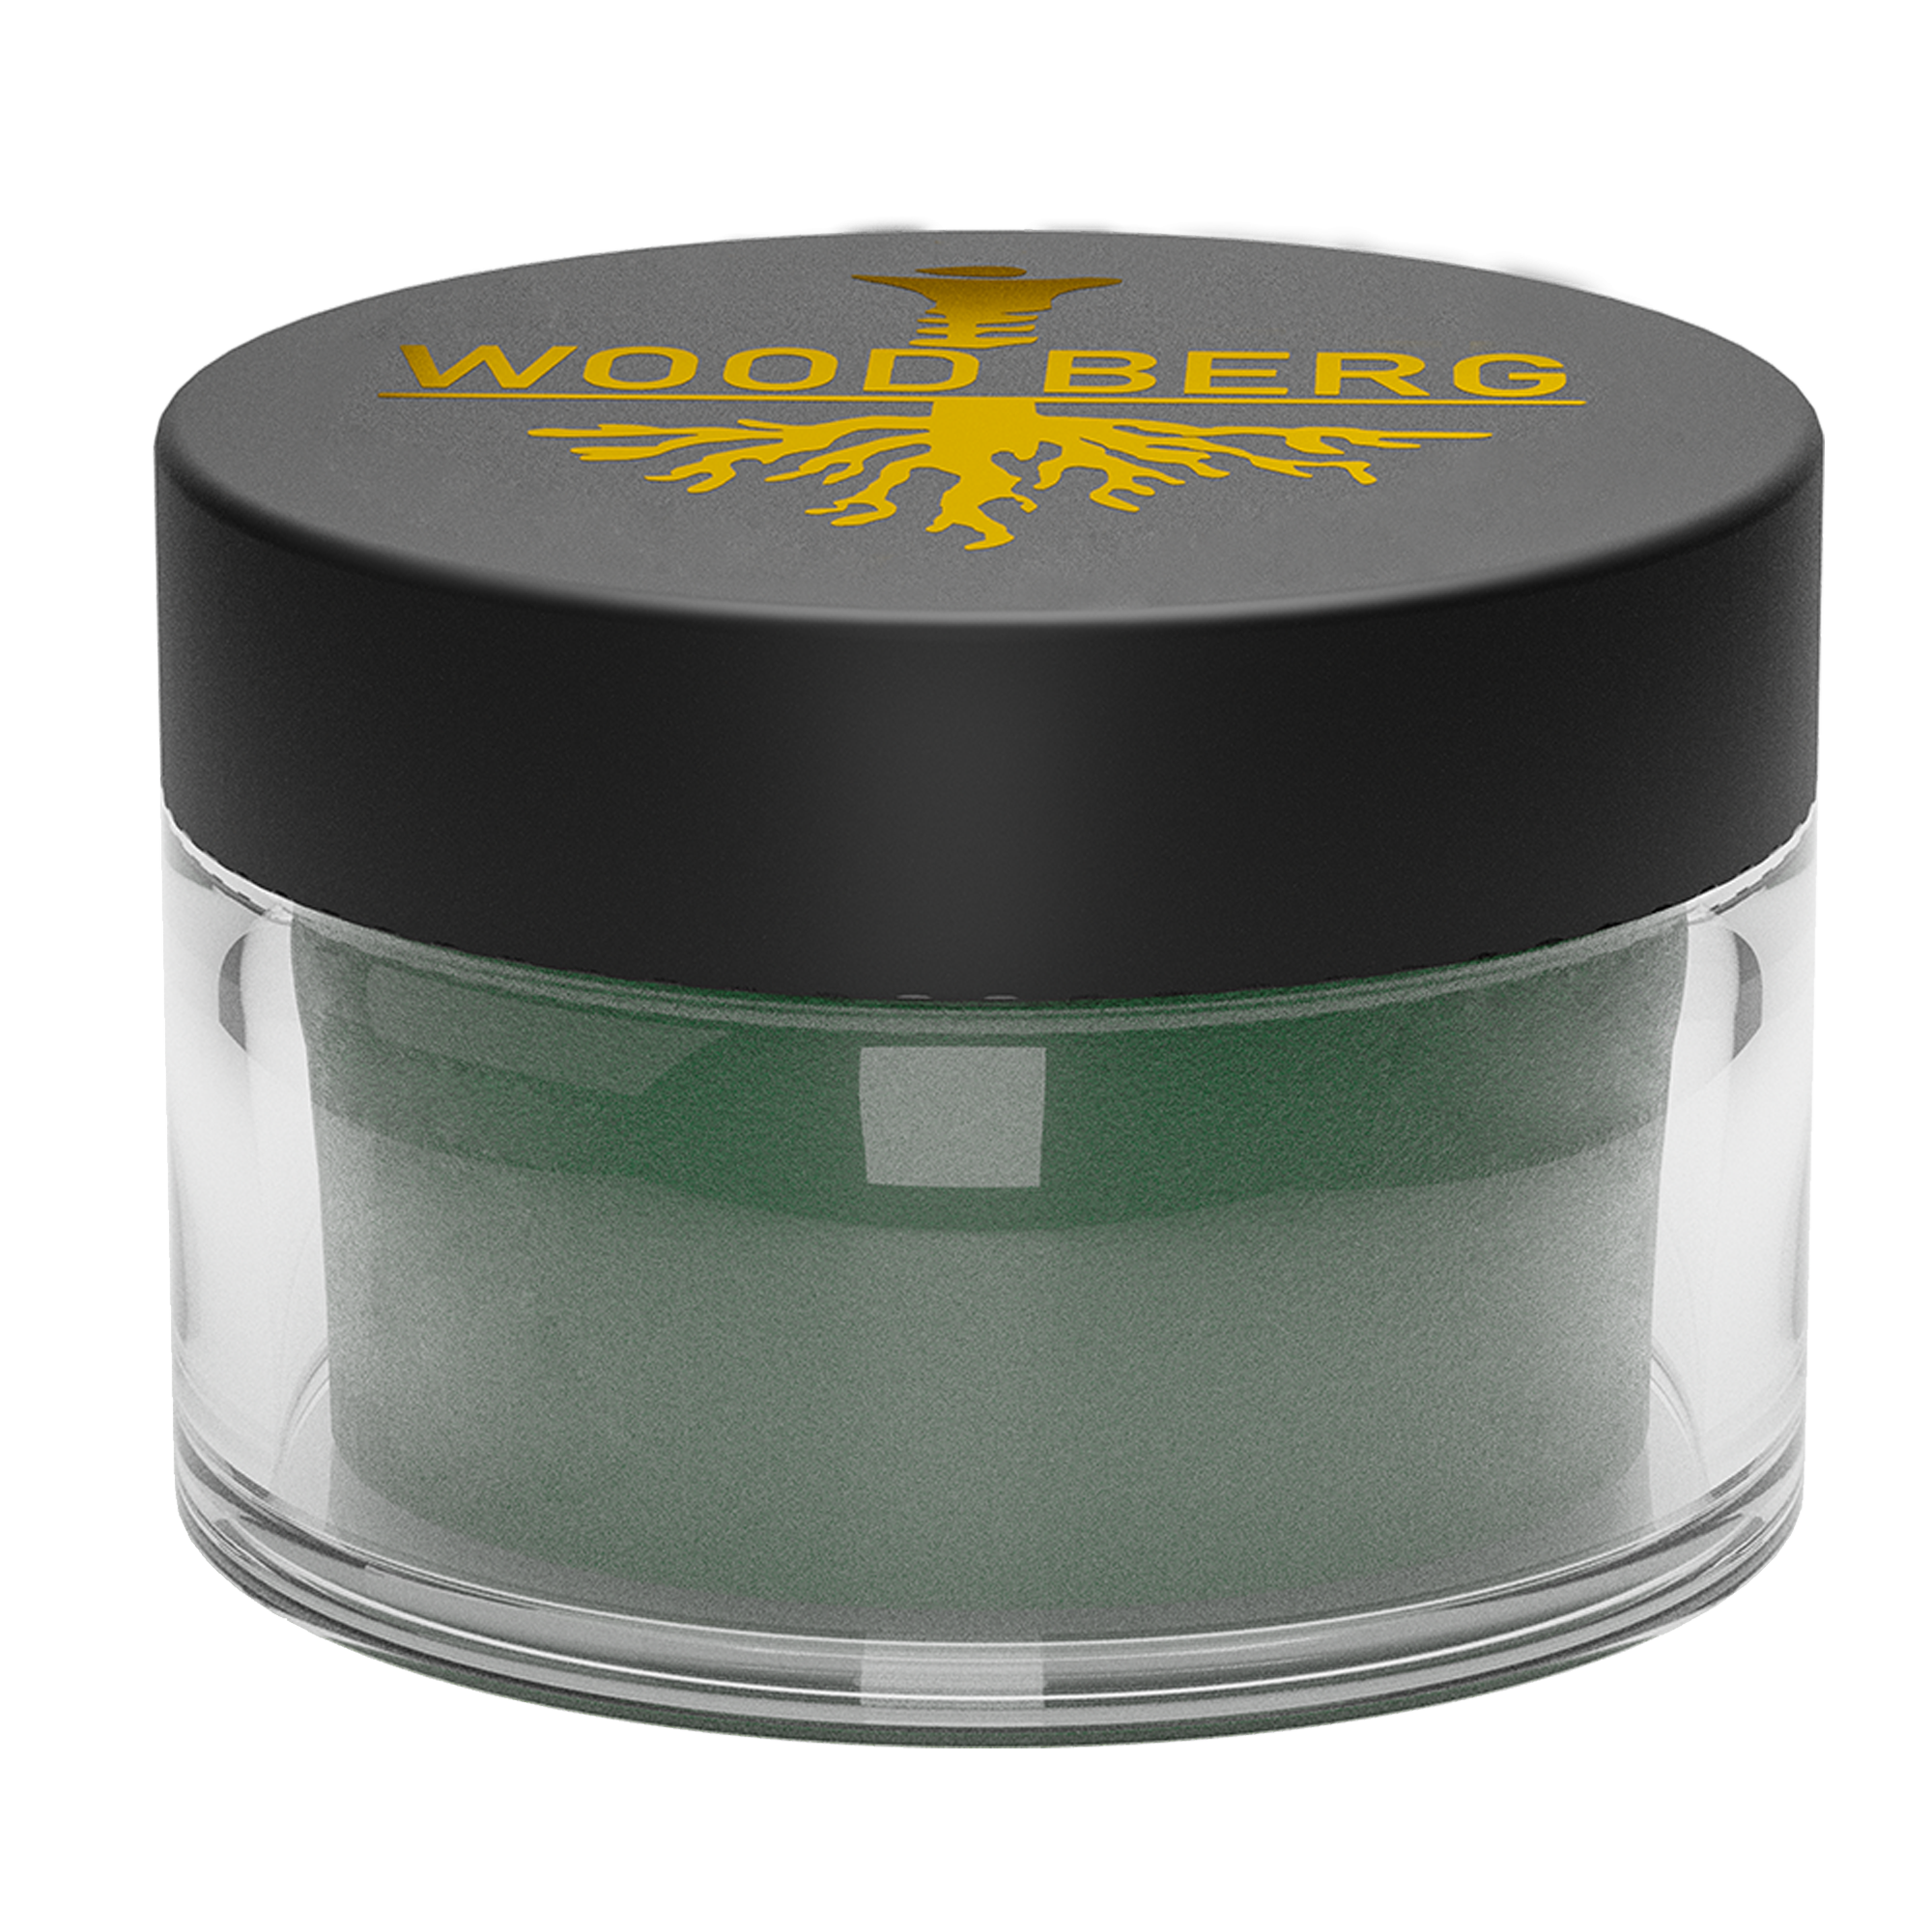 Woodberg - لون مايكا اخضر داكن 15 غرام 